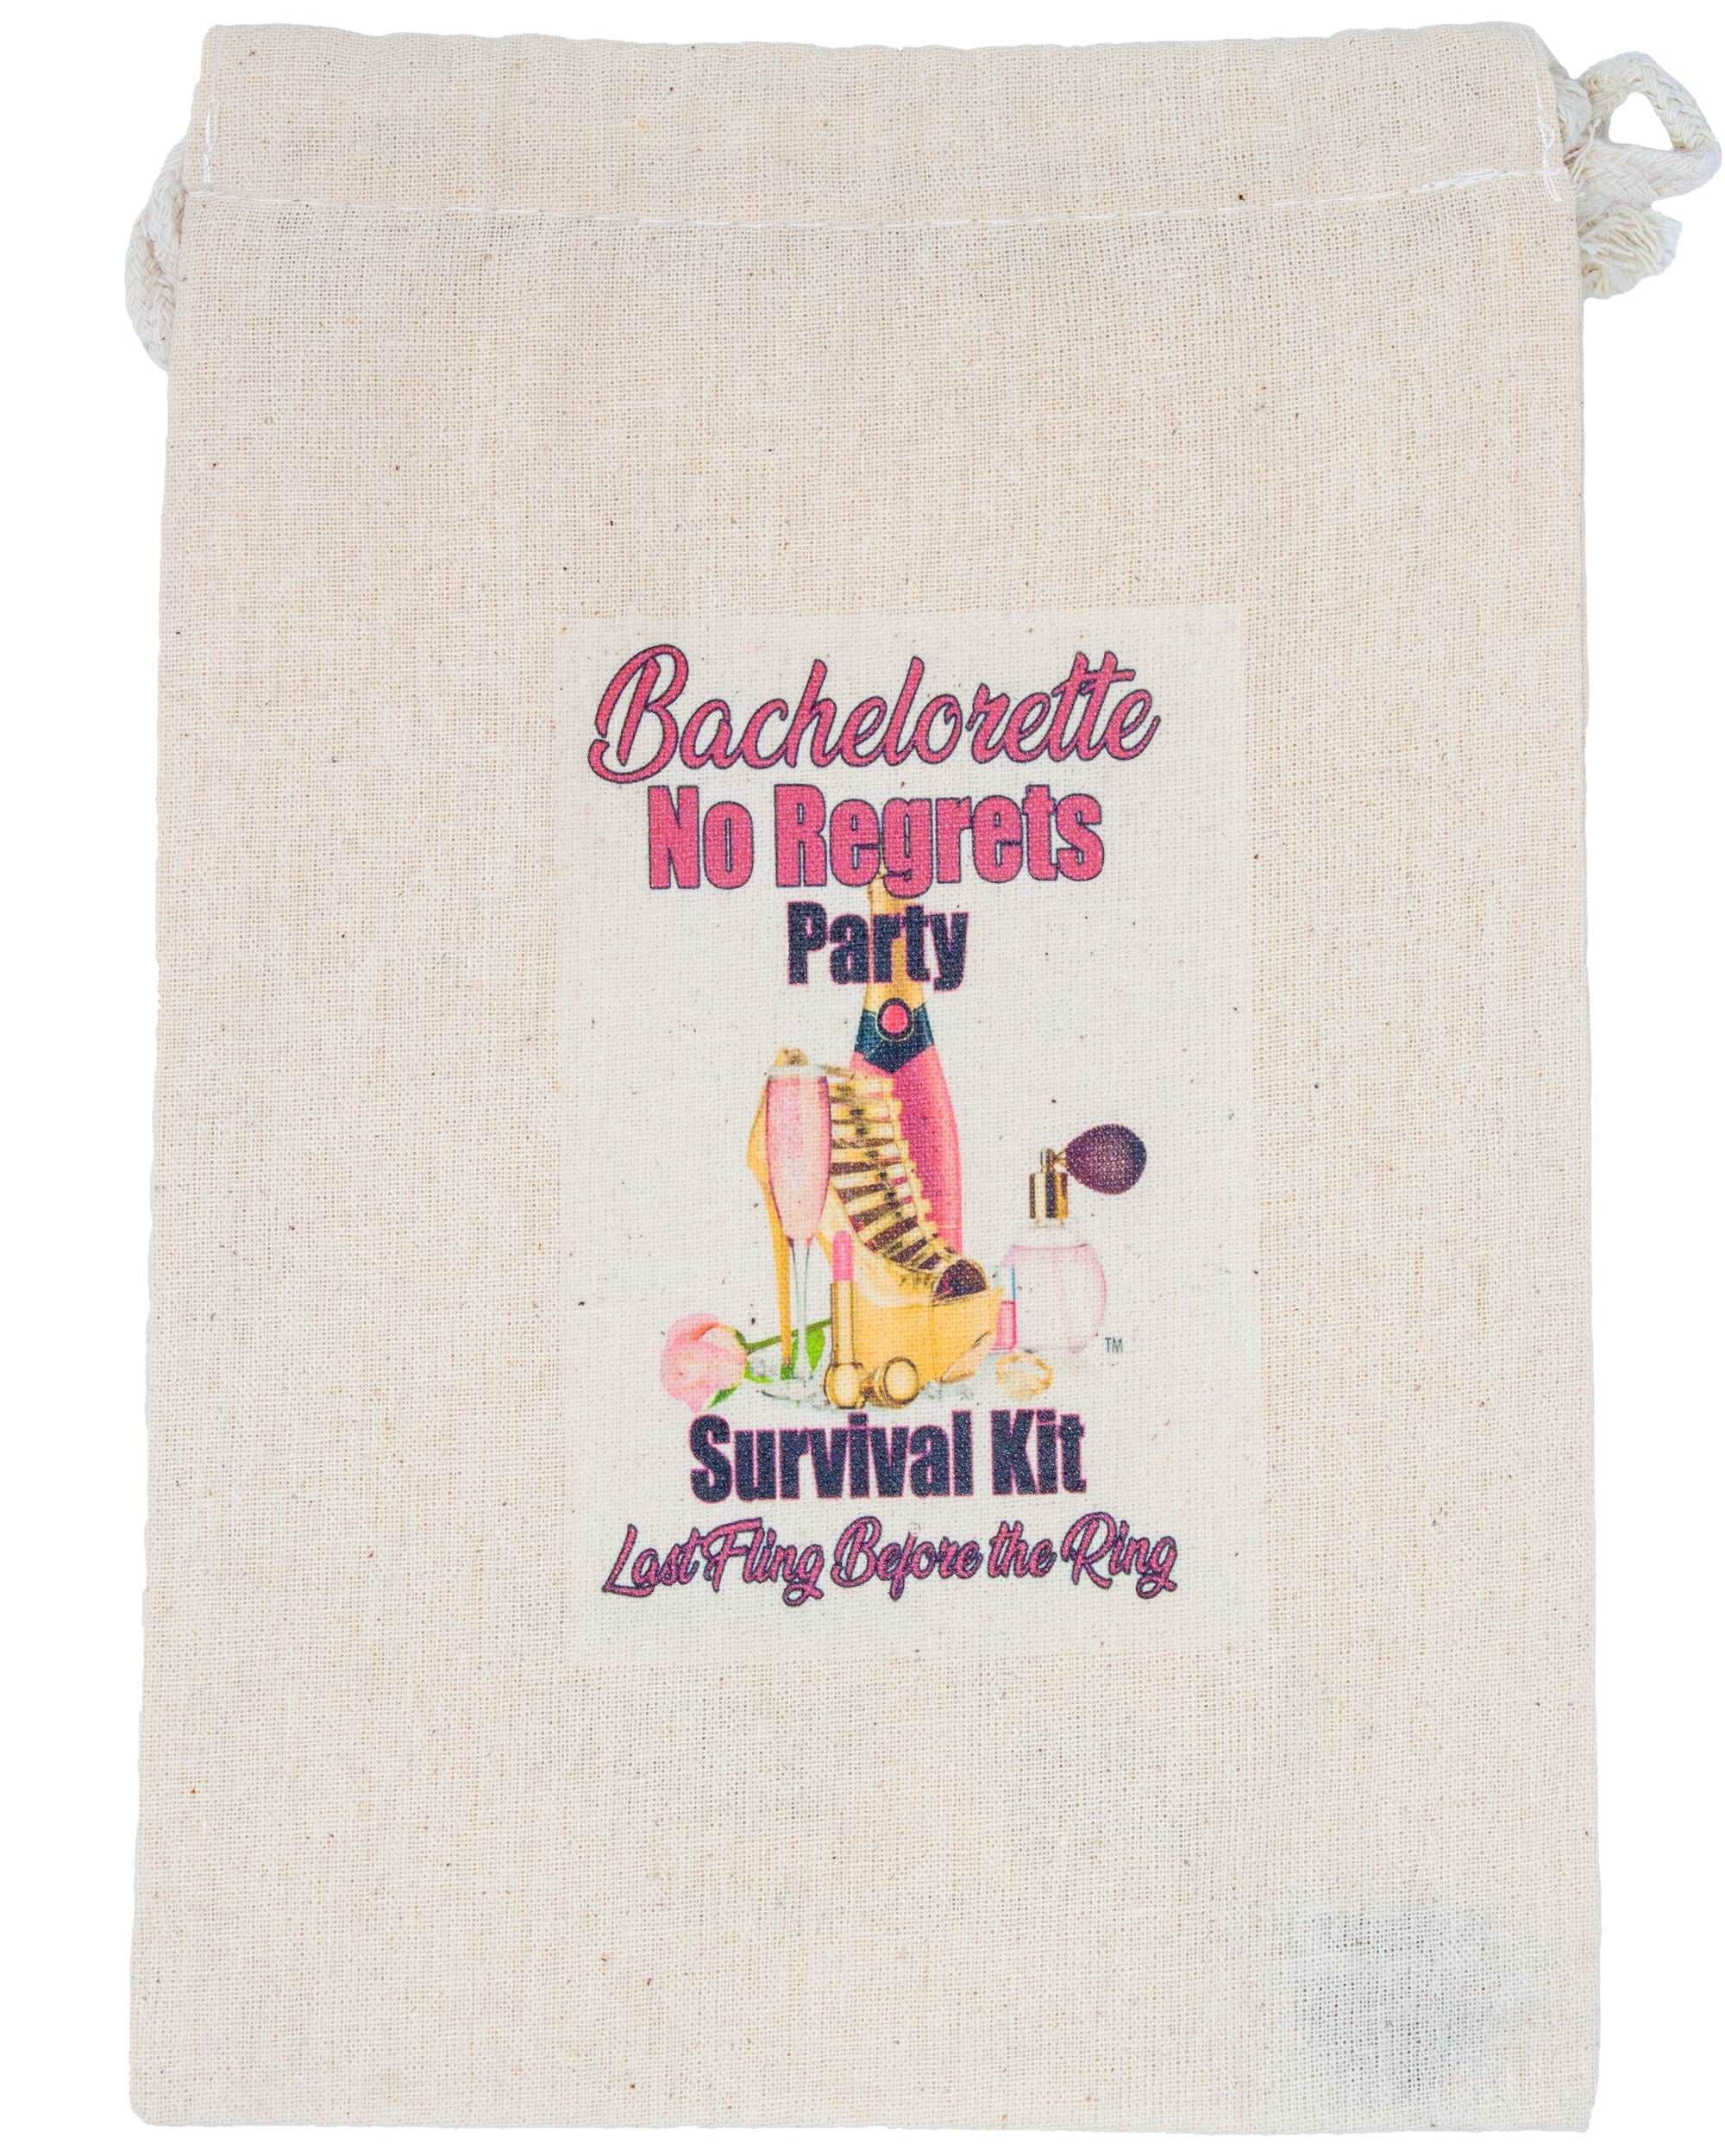 Pin by Rebecca Henderson on Gifts | Bachelorette party gifts, Bachelorette  party, Bachelorette gift baskets